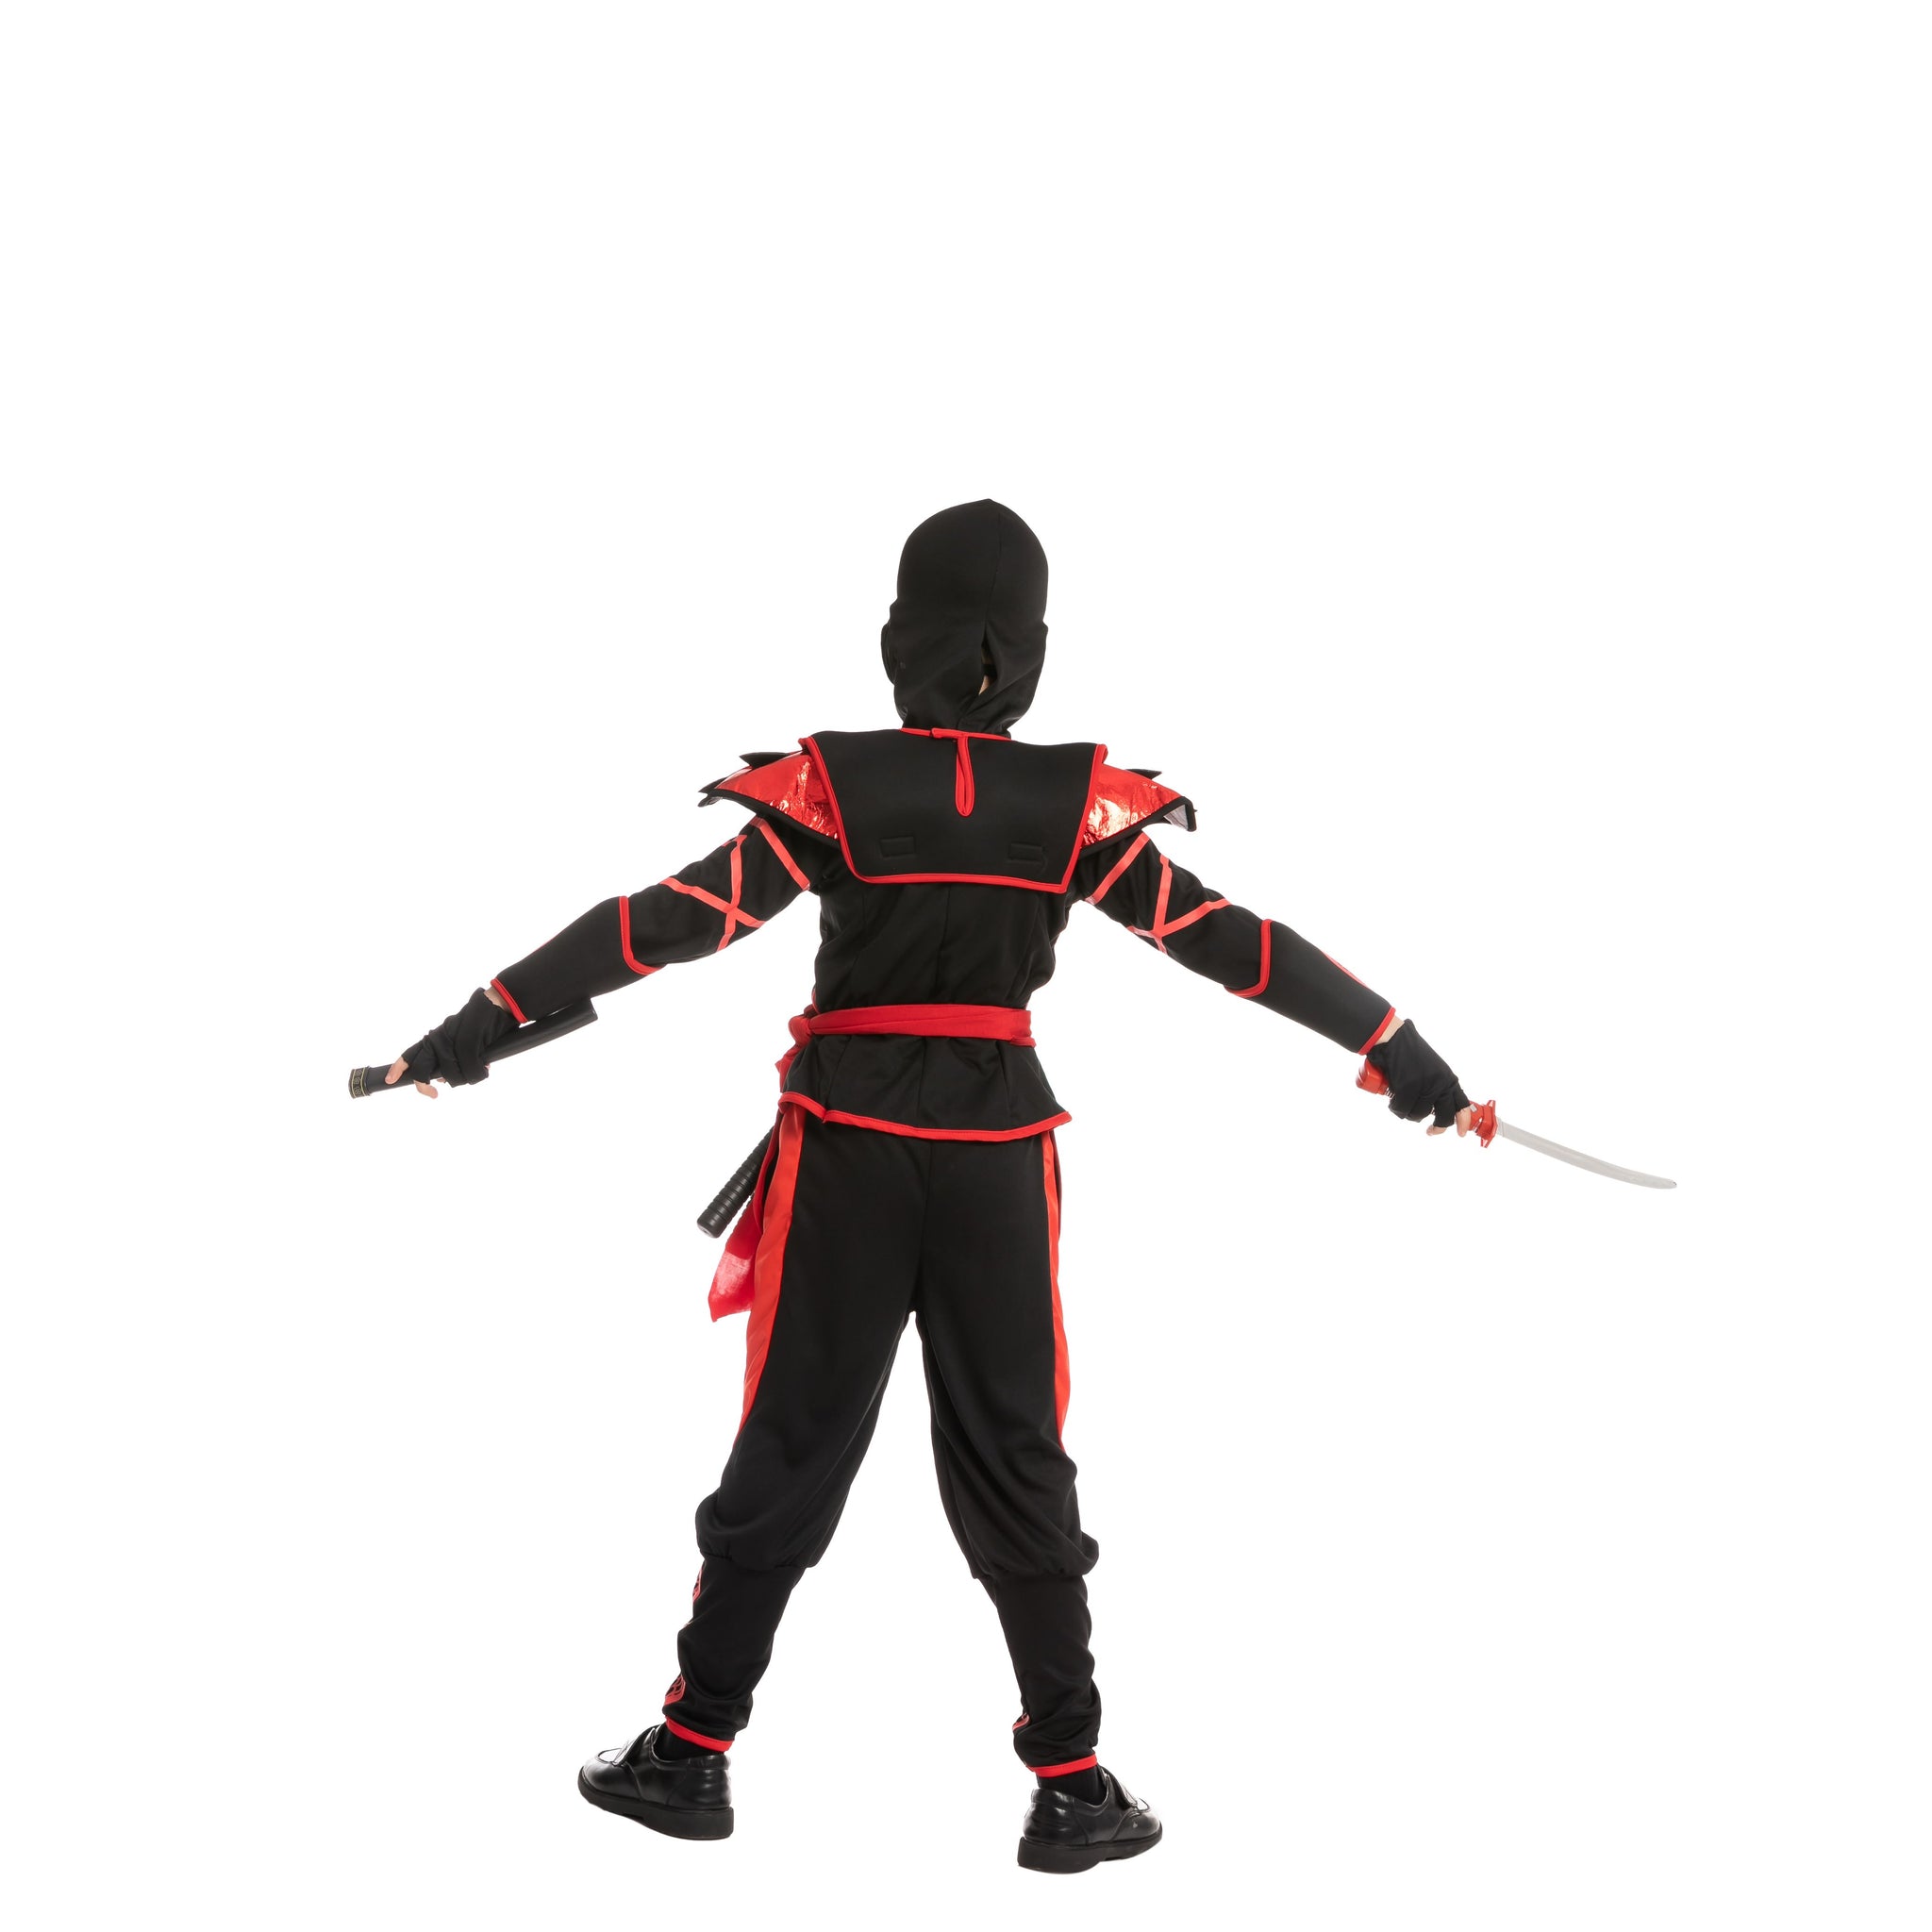 Ninja Assassin Costume, Men's Ninja Costumes Leg Avenue, 44% OFF